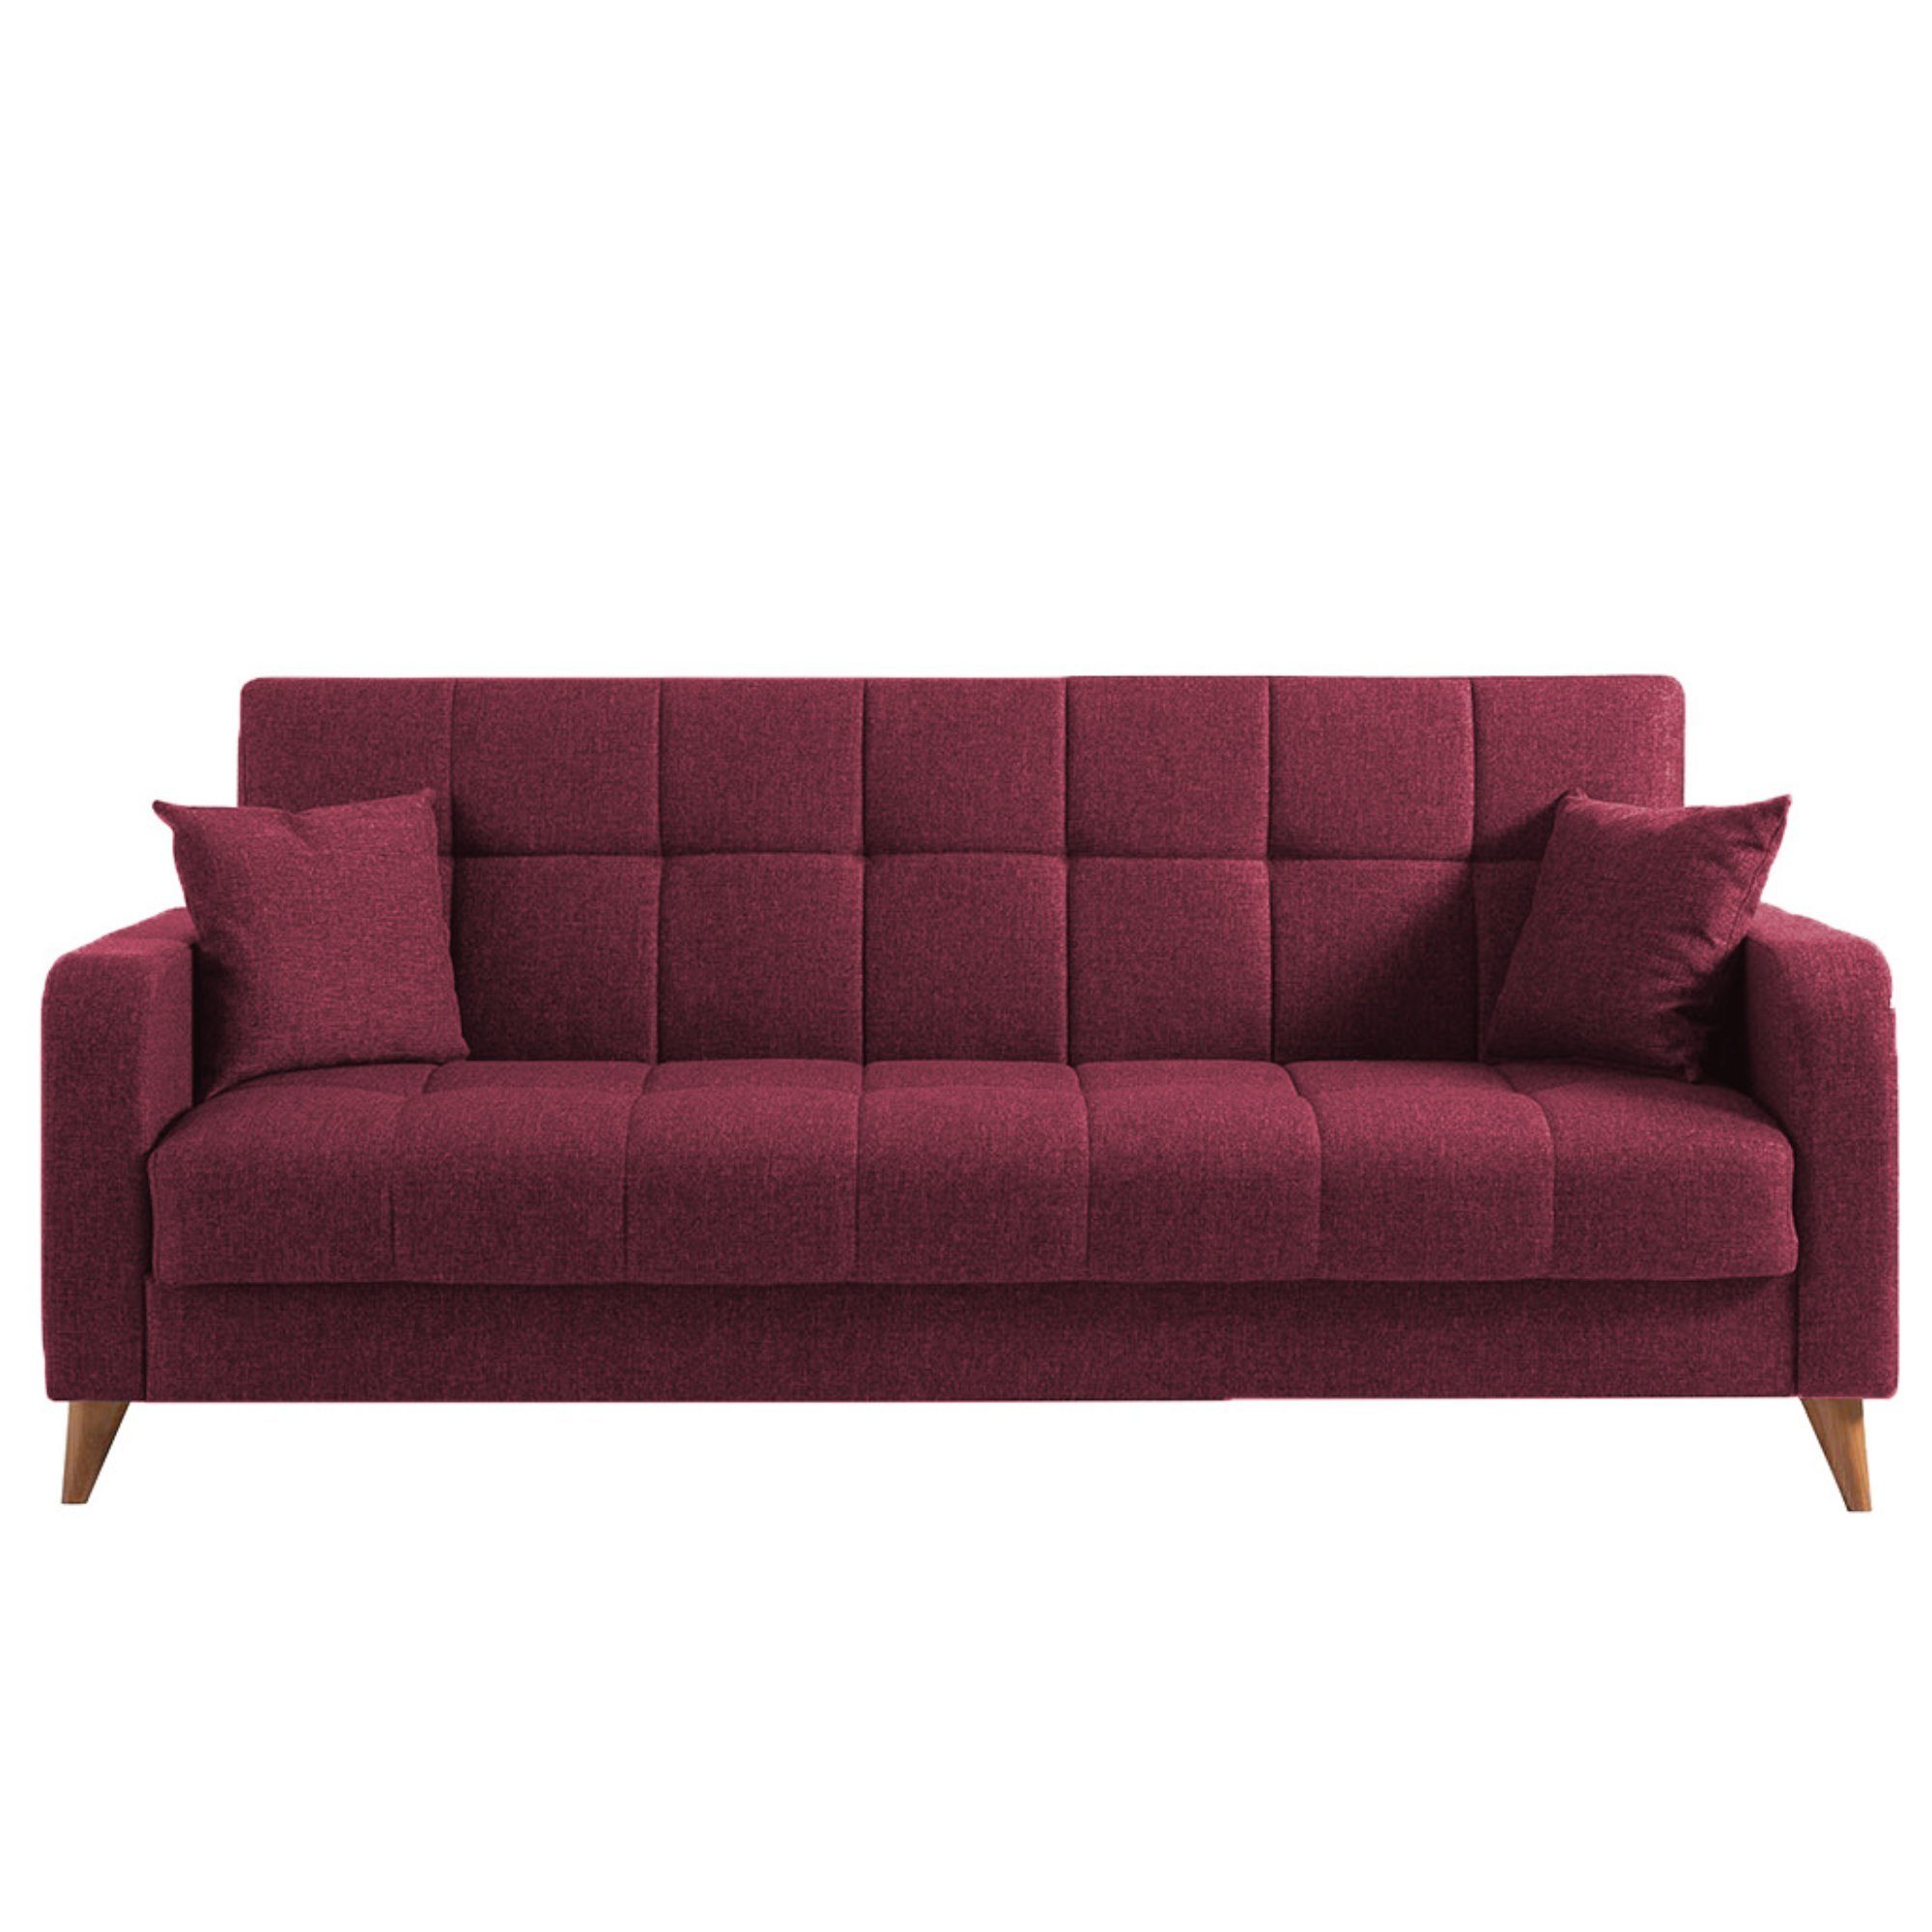 Series Sitzer 90 Bilbao x Bettfunktion Sofa Sofa, cm 98 Burgundy 219 Couch Gozos Polybaumwolle, x 3 Gozos